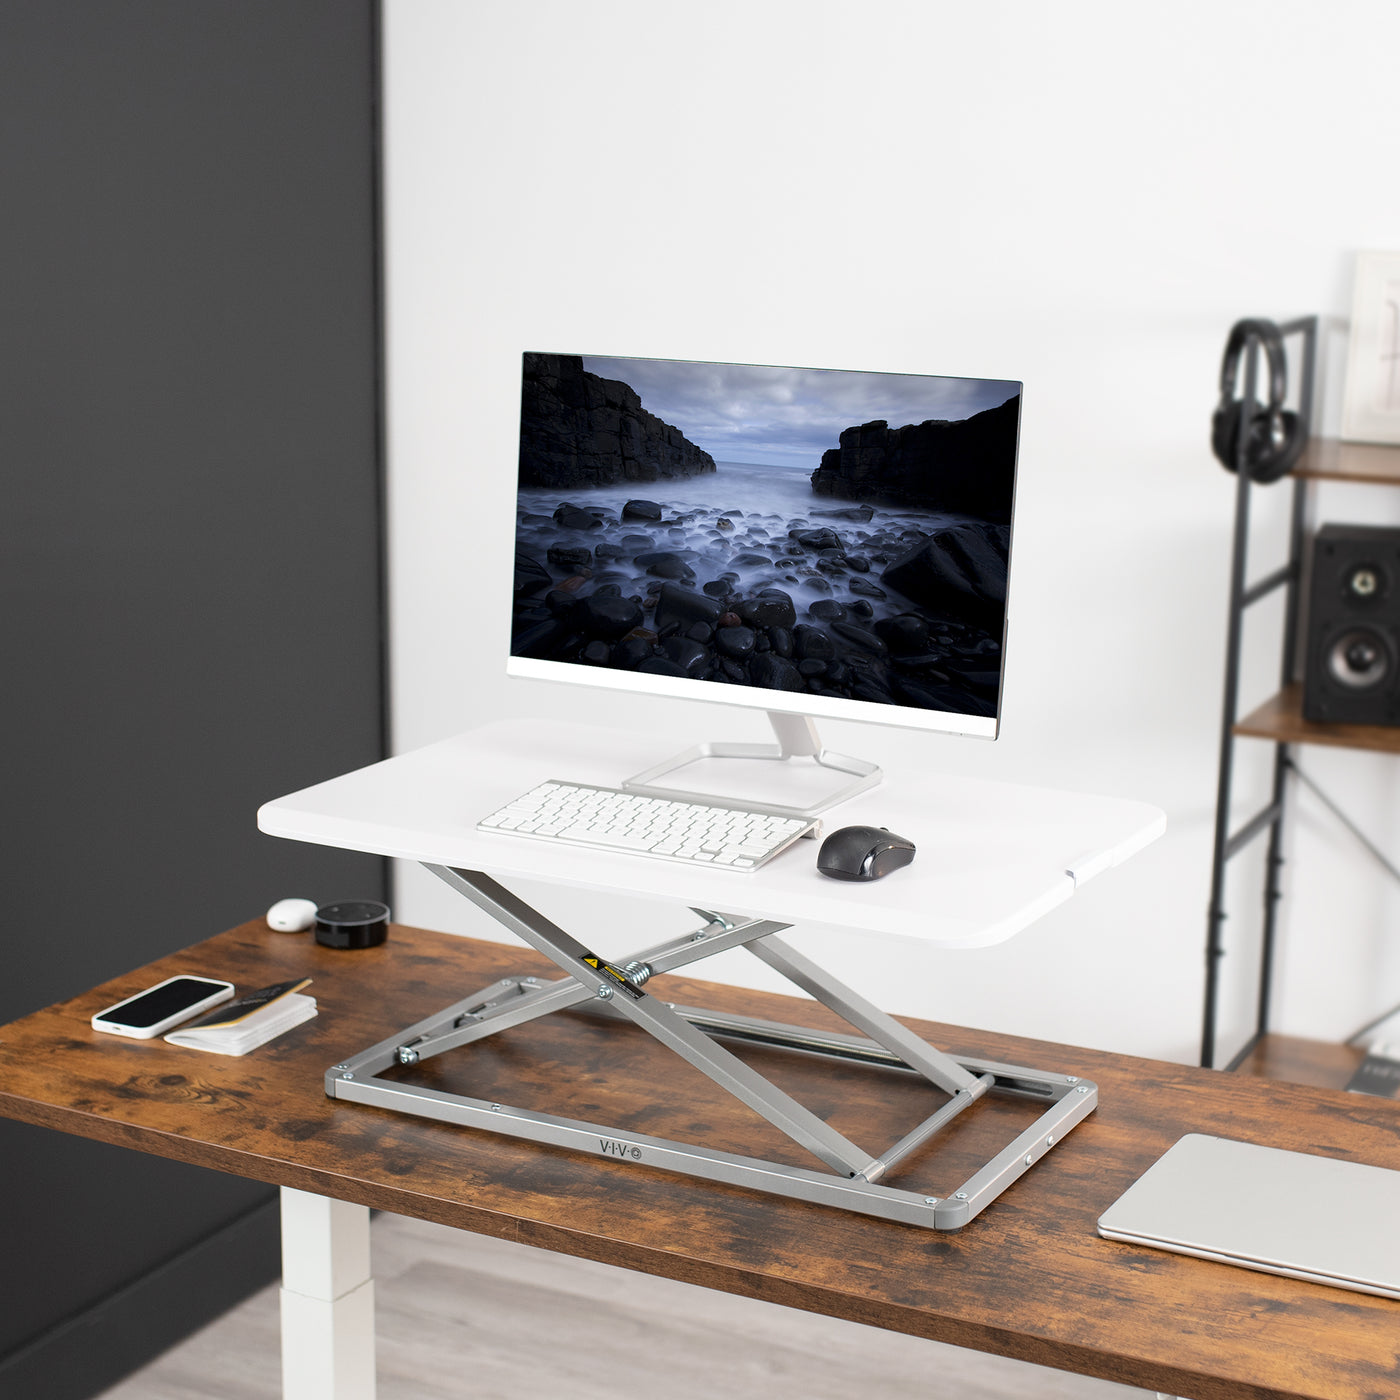 Heavy-duty height adjustable desk converter monitor riser.